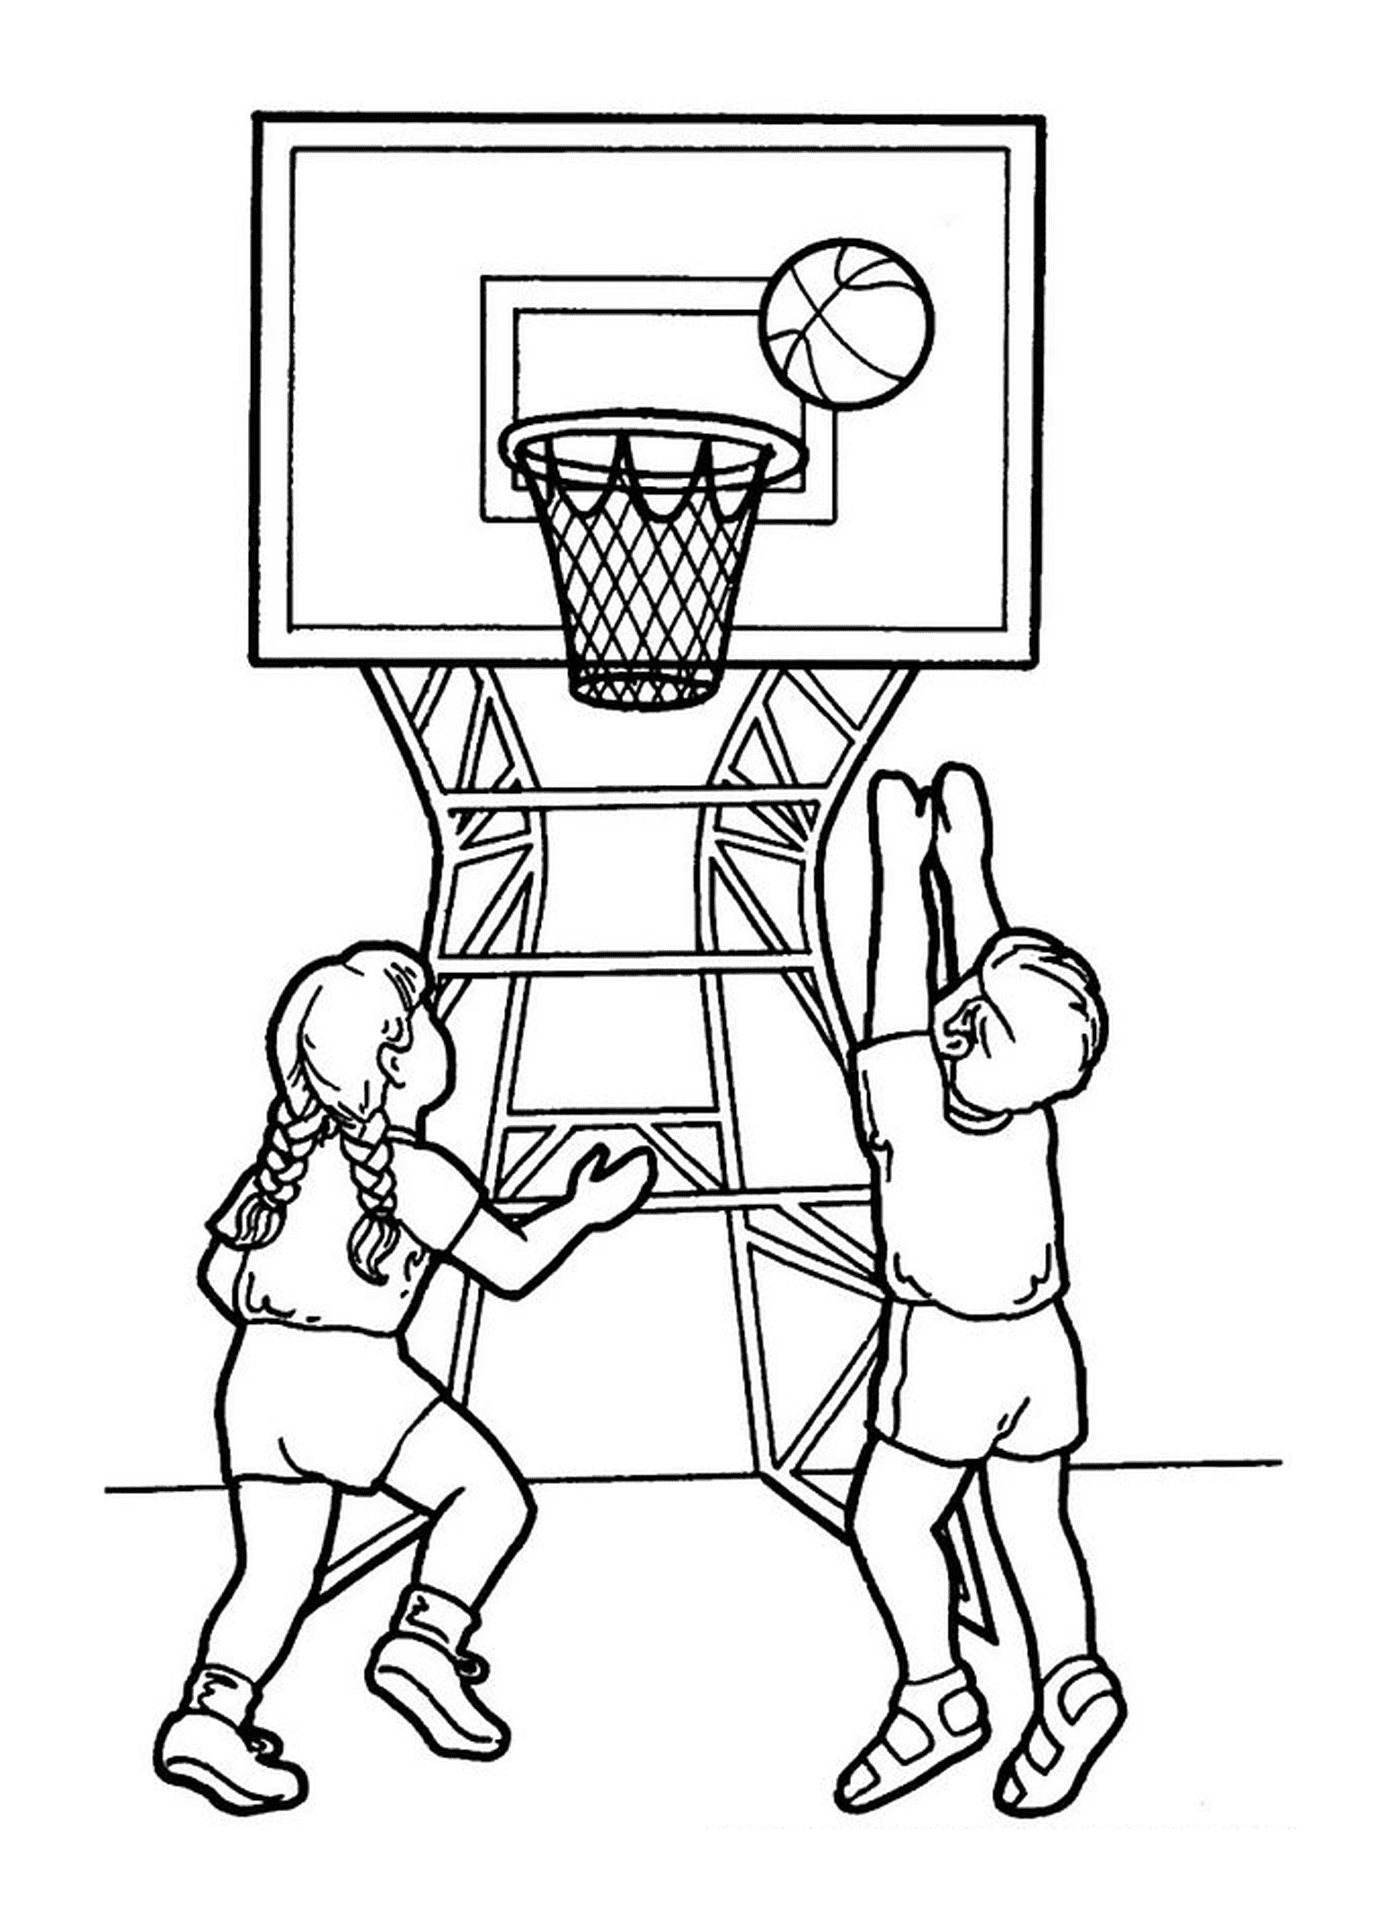  A boy and a girl play basketball 